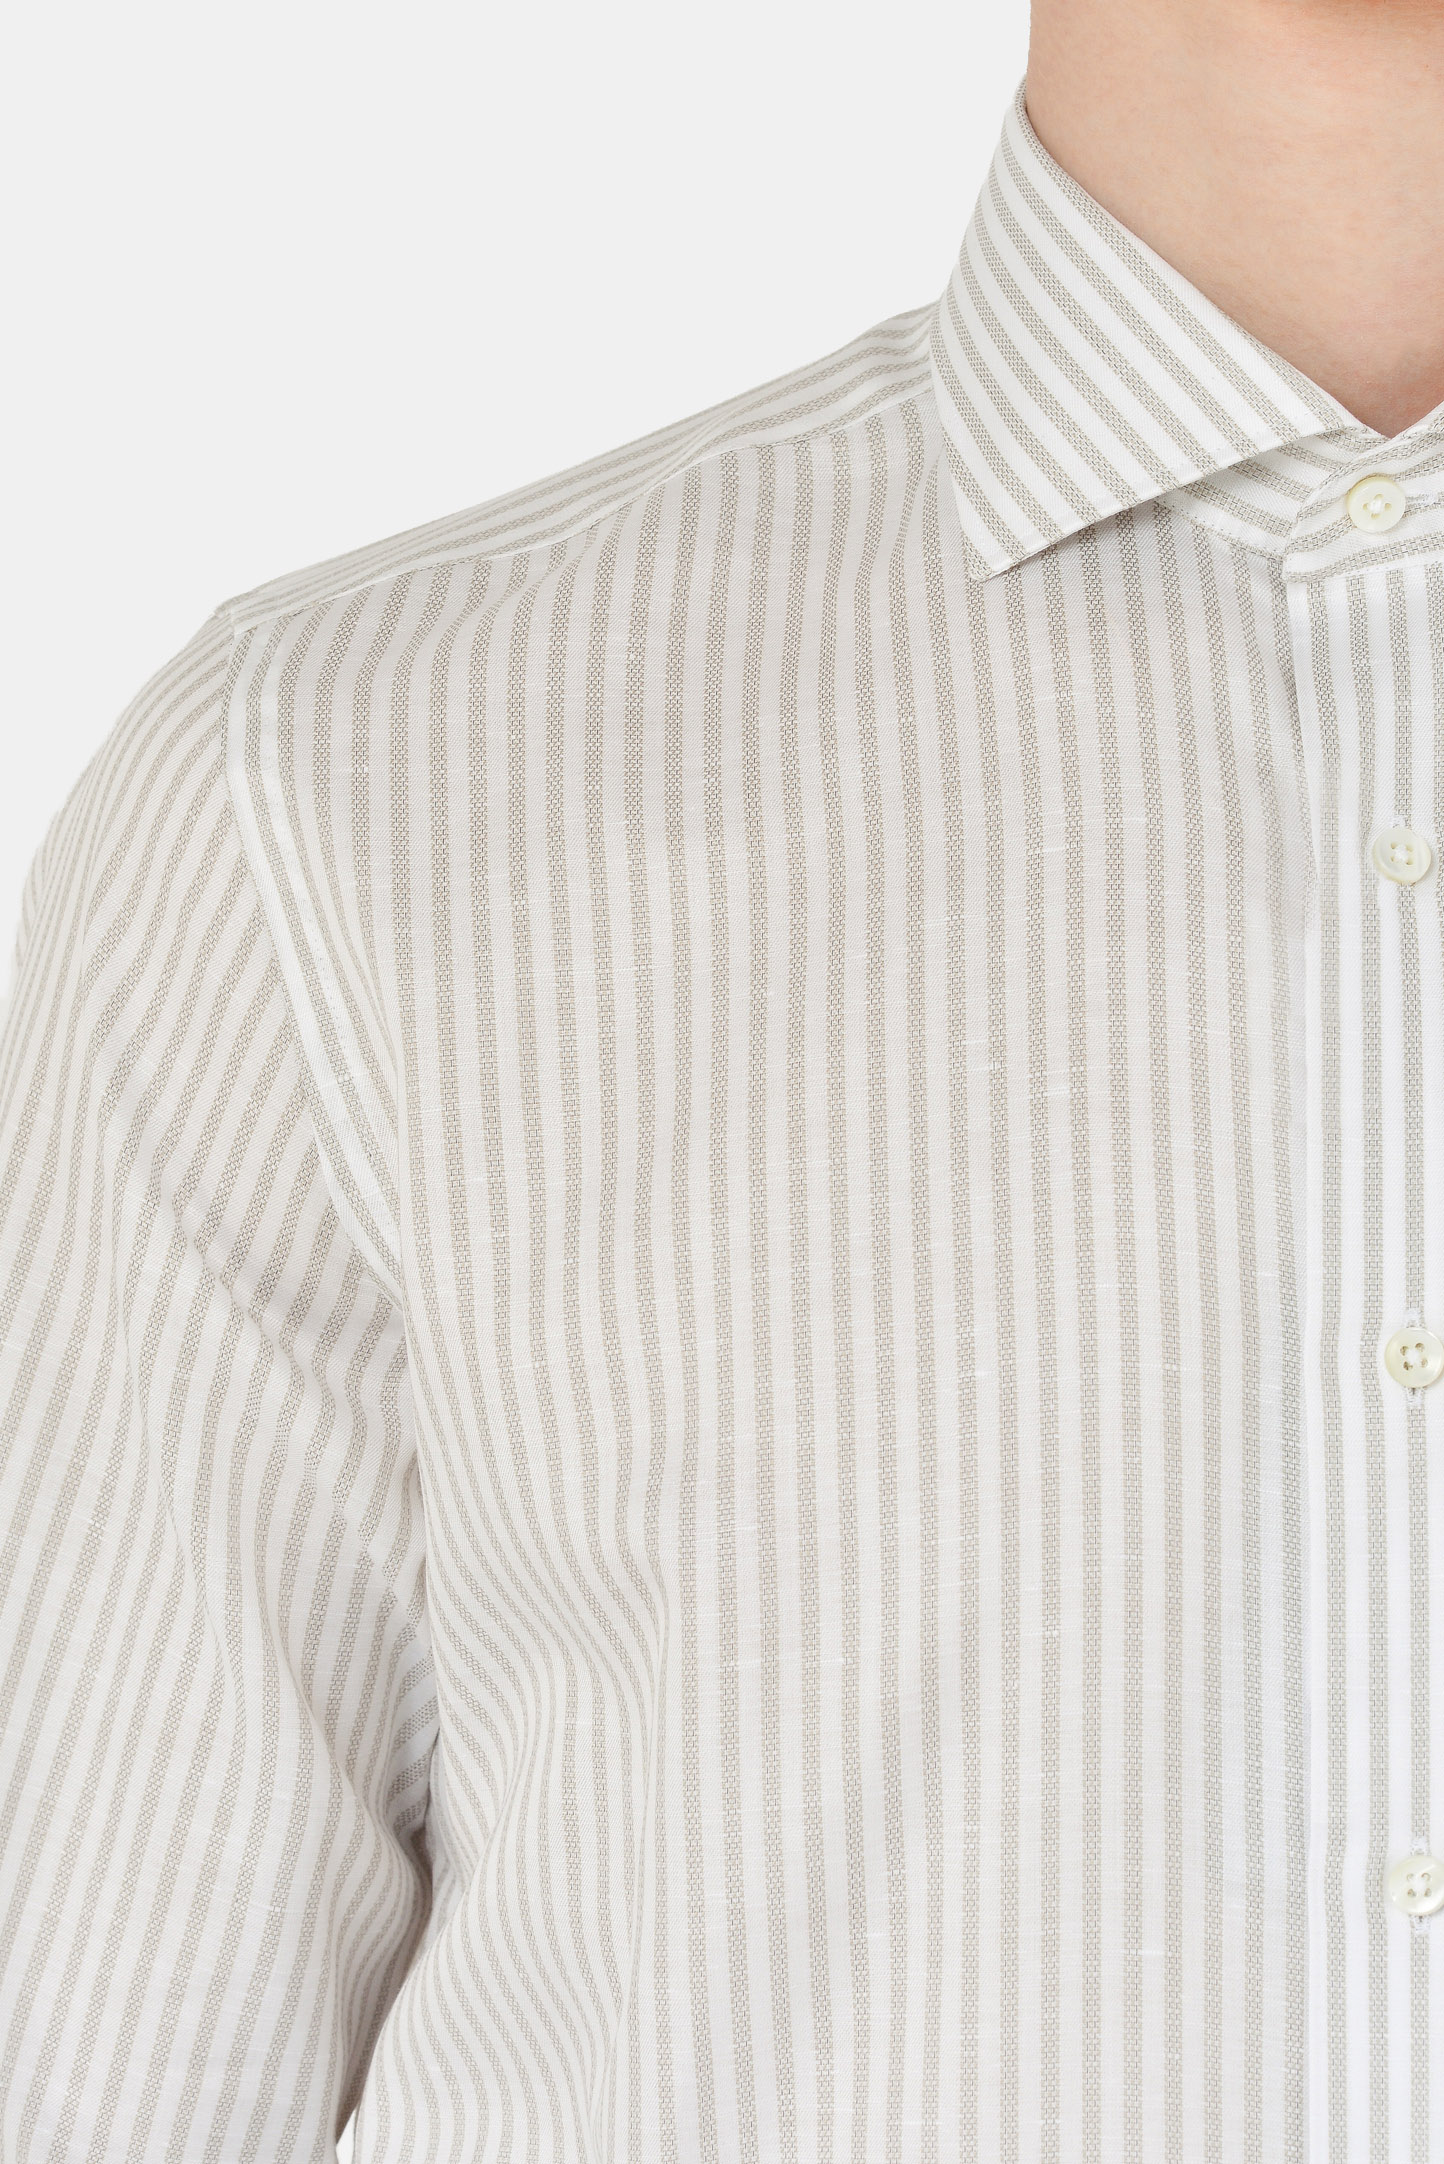 Рубашка CANALI GR02289/801, цвет: Серый, Мужской